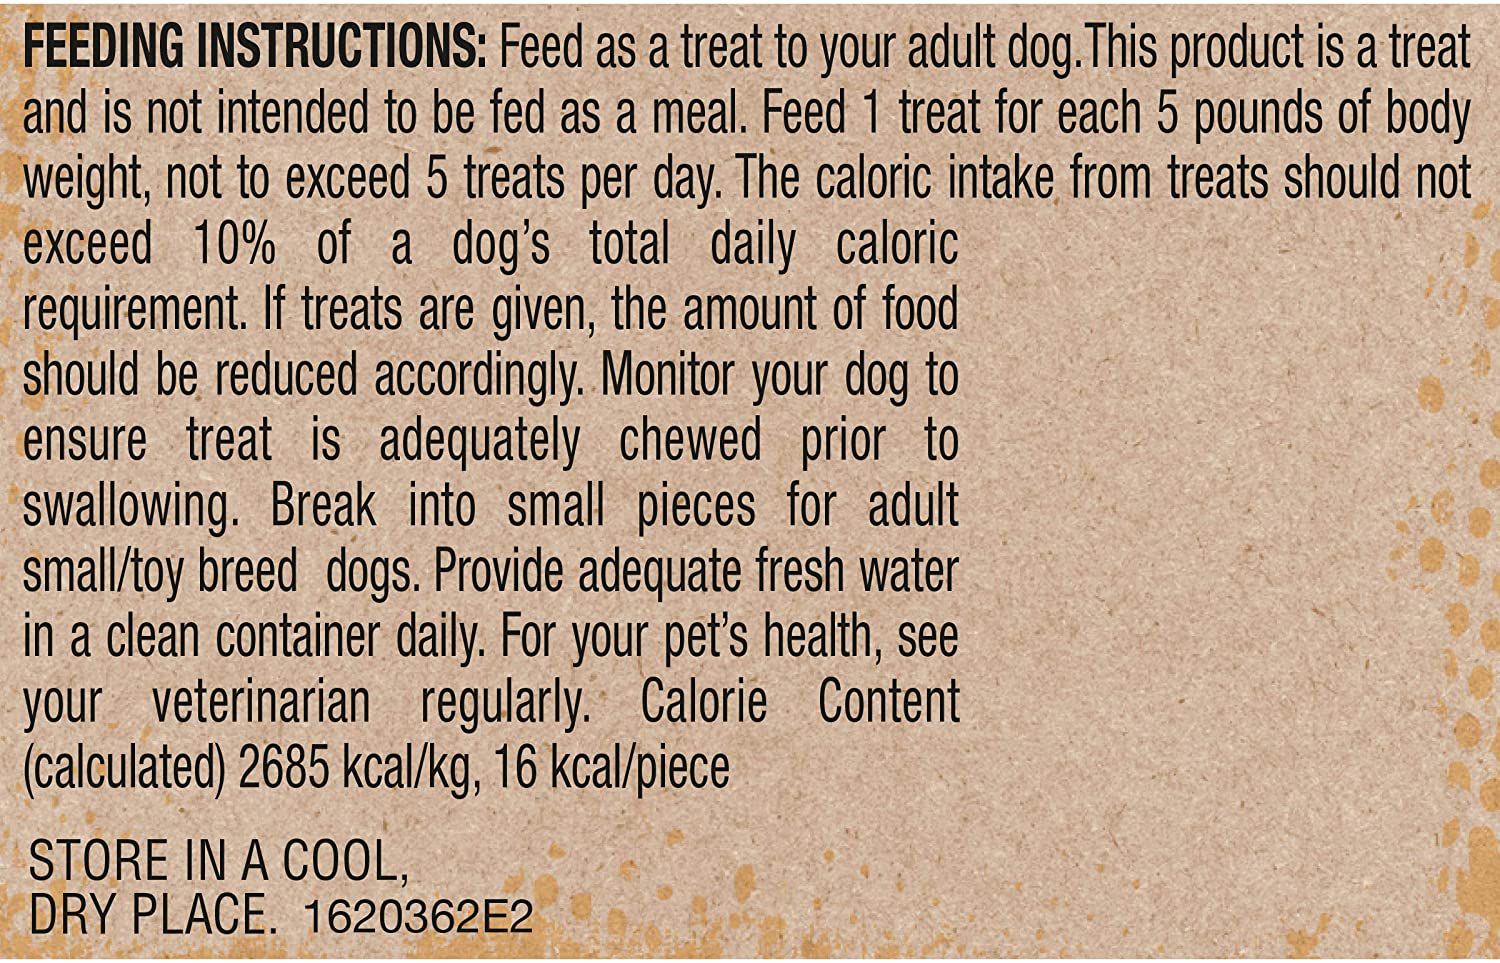 Purina Alpo Tbonz Filet Mignon Flavor Dog Treats - 40 Oz. Canister Animals & Pet Supplies > Pet Supplies > Dog Supplies > Dog Treats Purina ALPO Brand Dog Food   